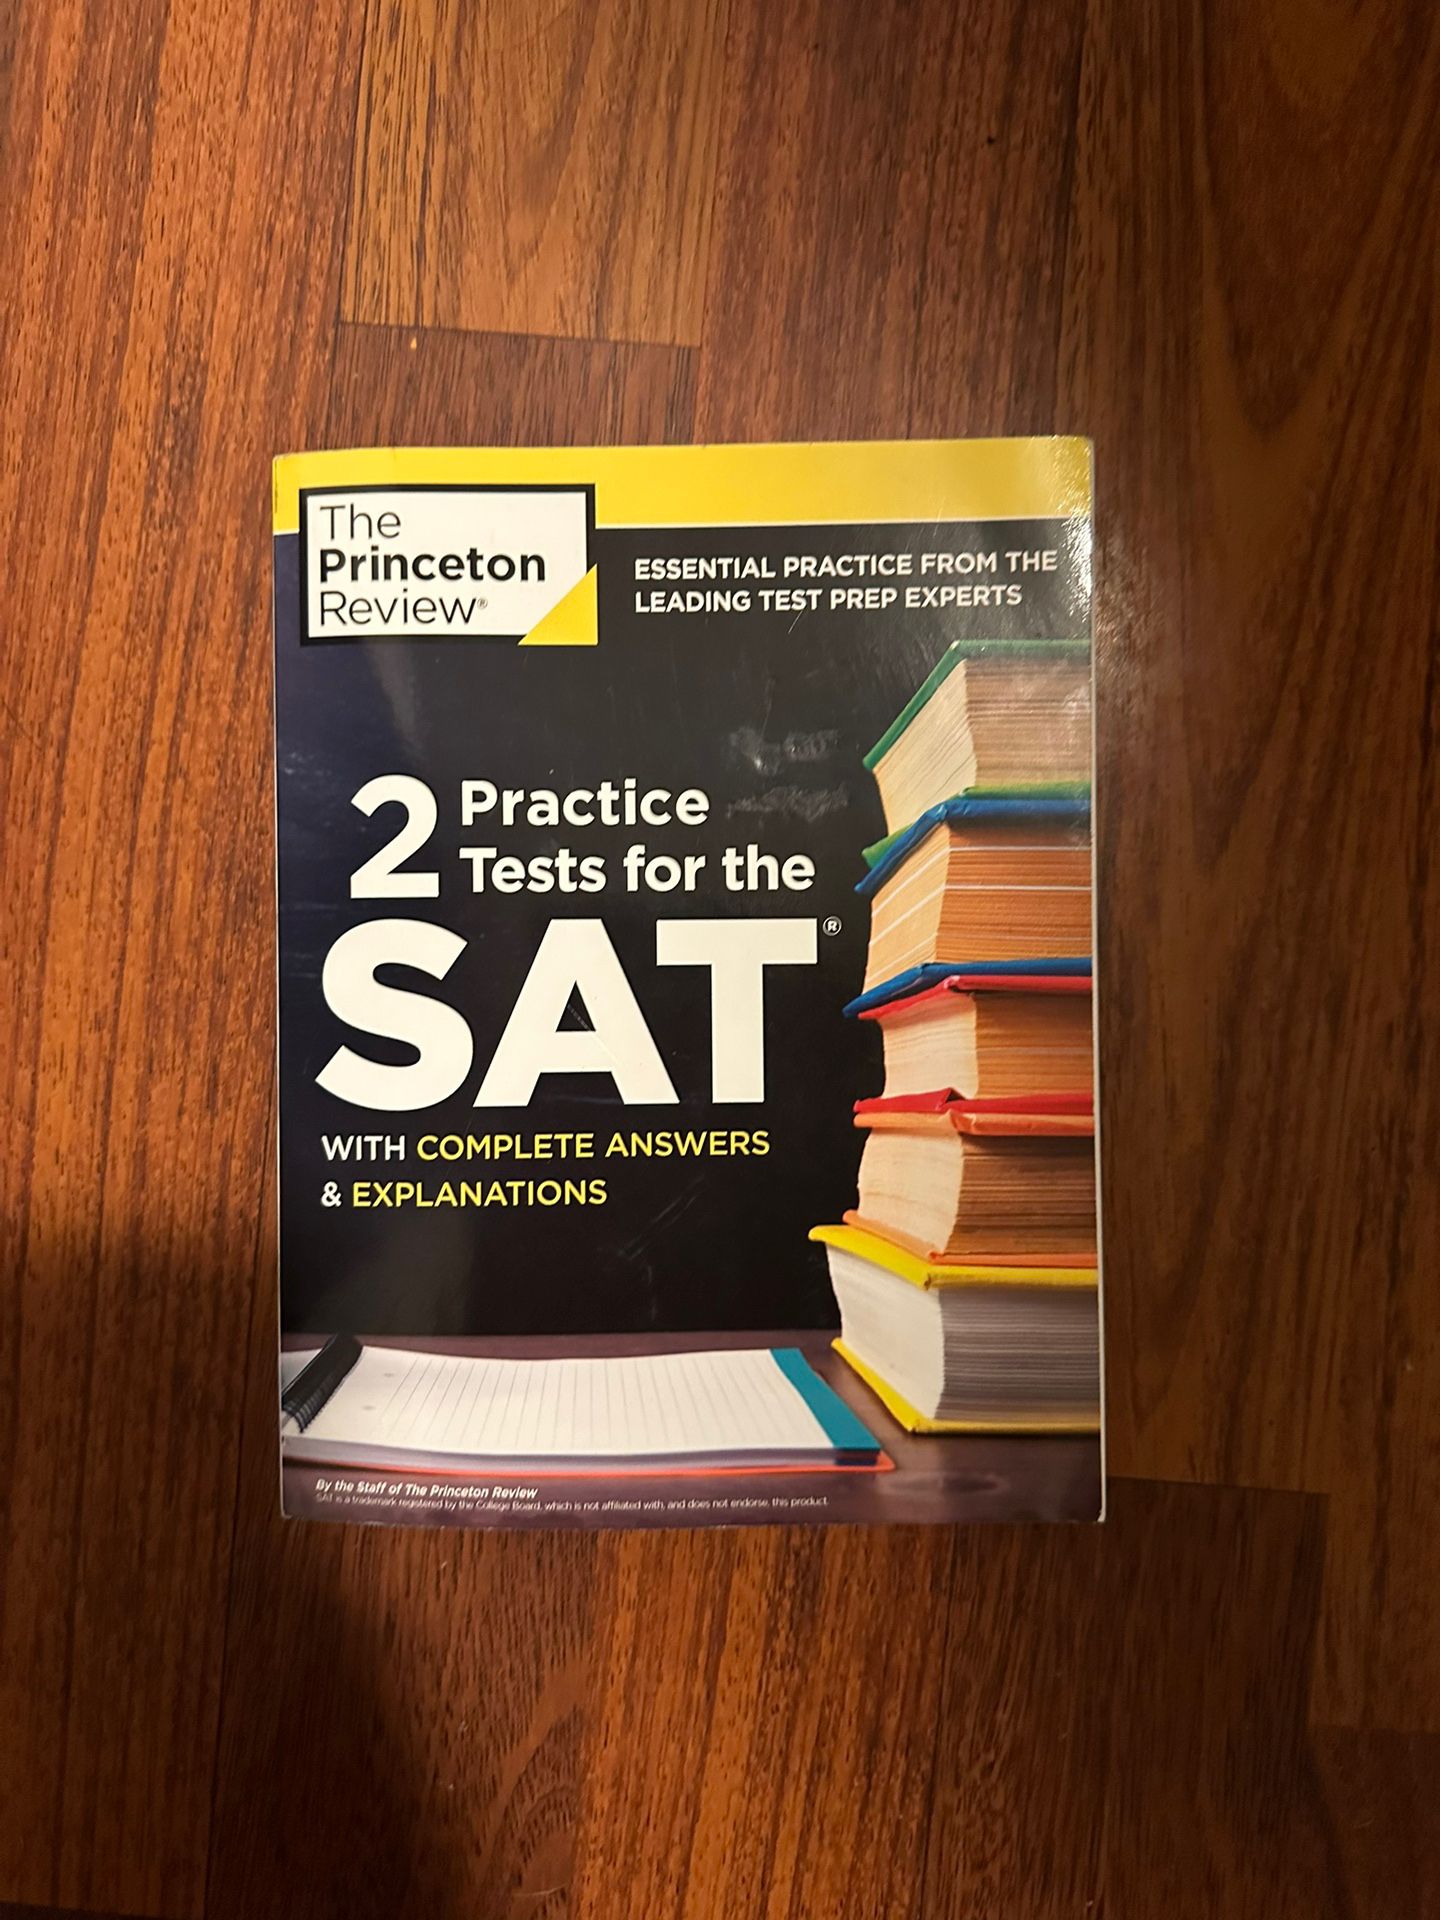 SAT preparation test book